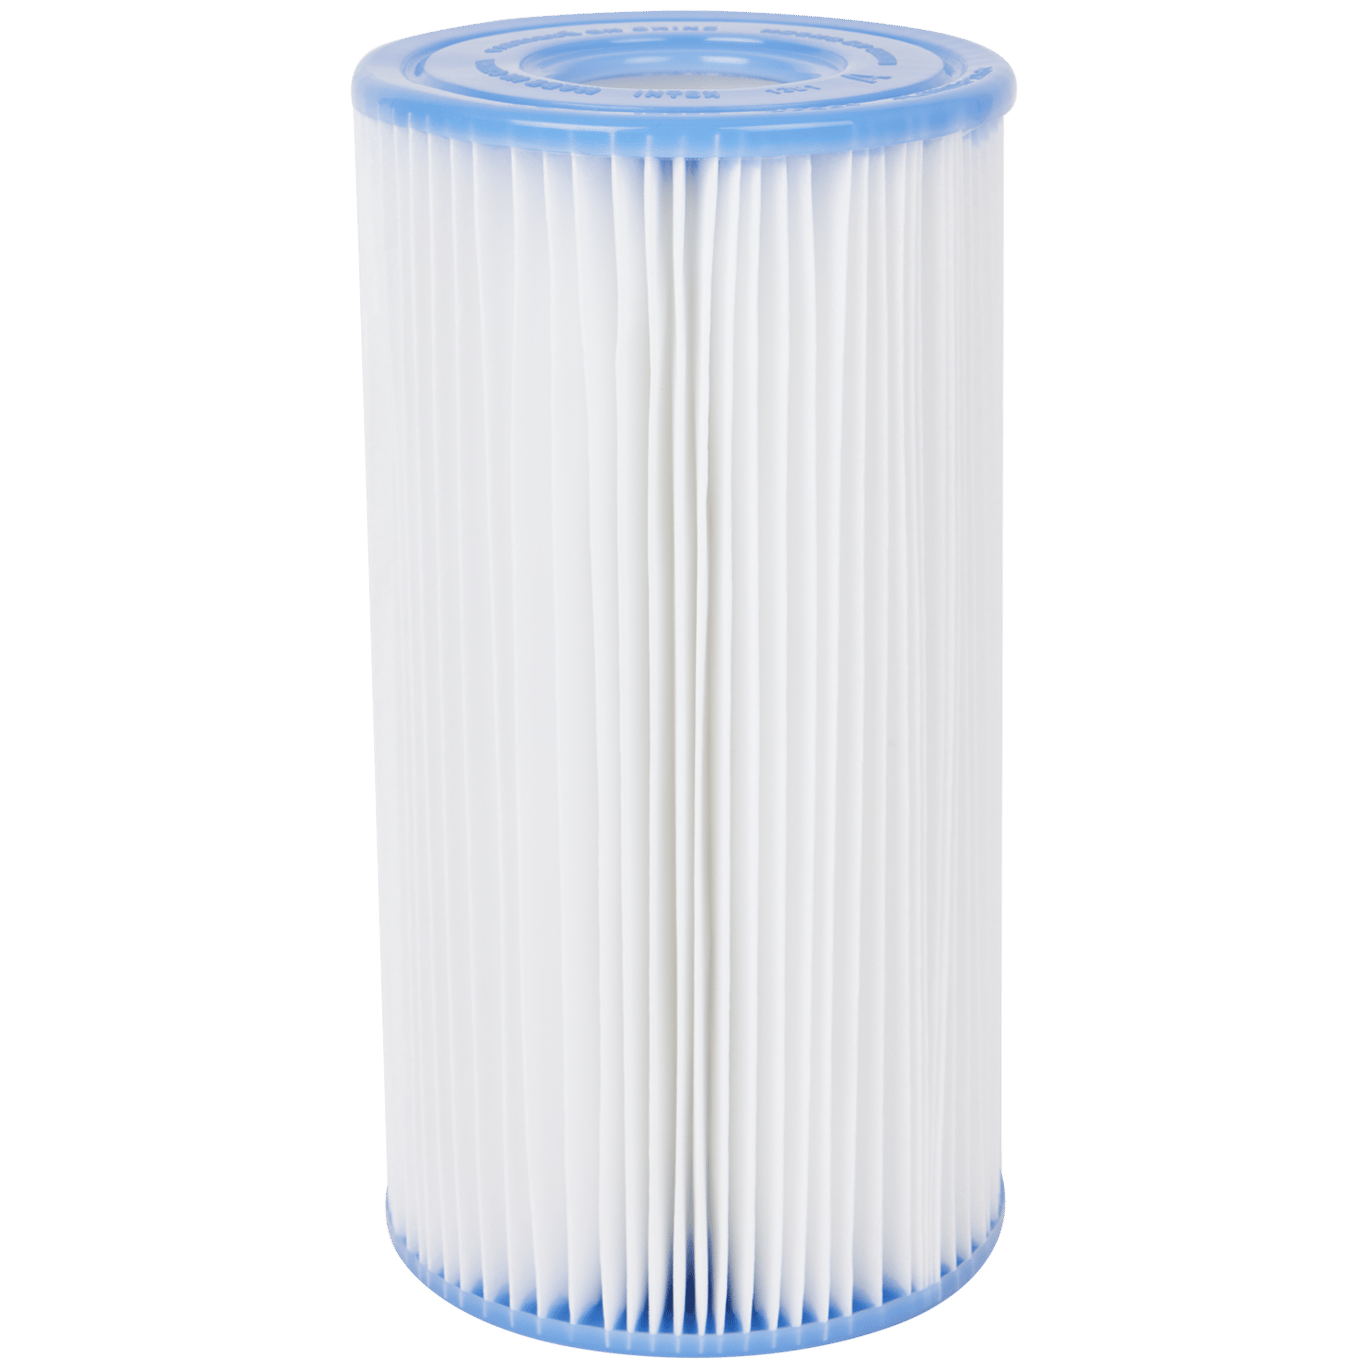 Pompa filtro per piscine Intex Krystal Clear